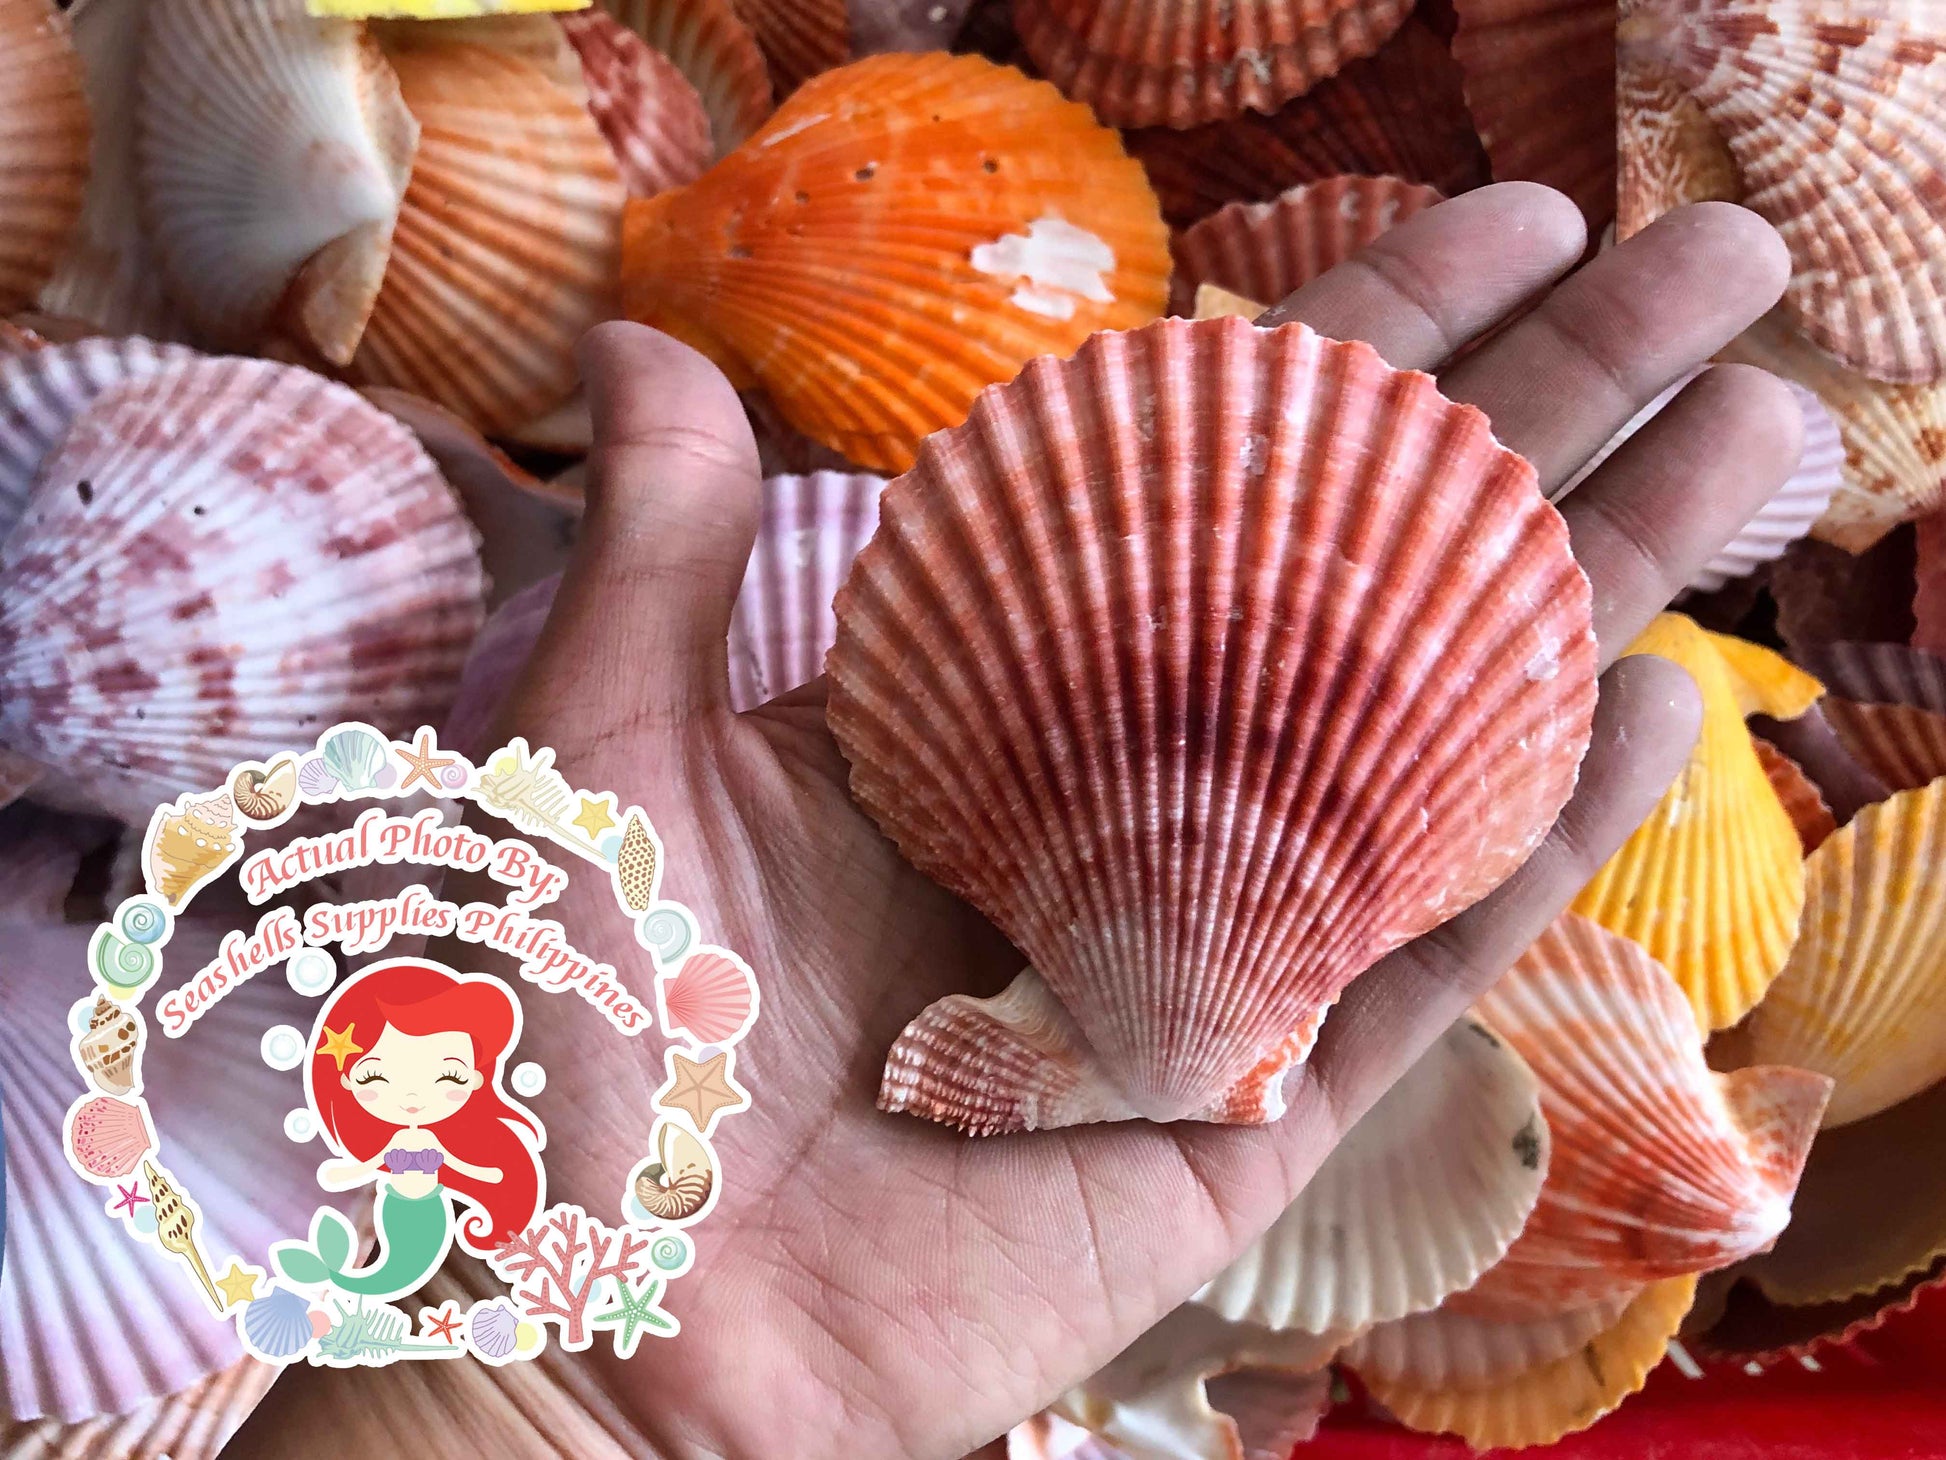 Noble Scallop Seashells - Pecten Nobilis - (10 shells approx. 1.5-2 in –  seashellmart